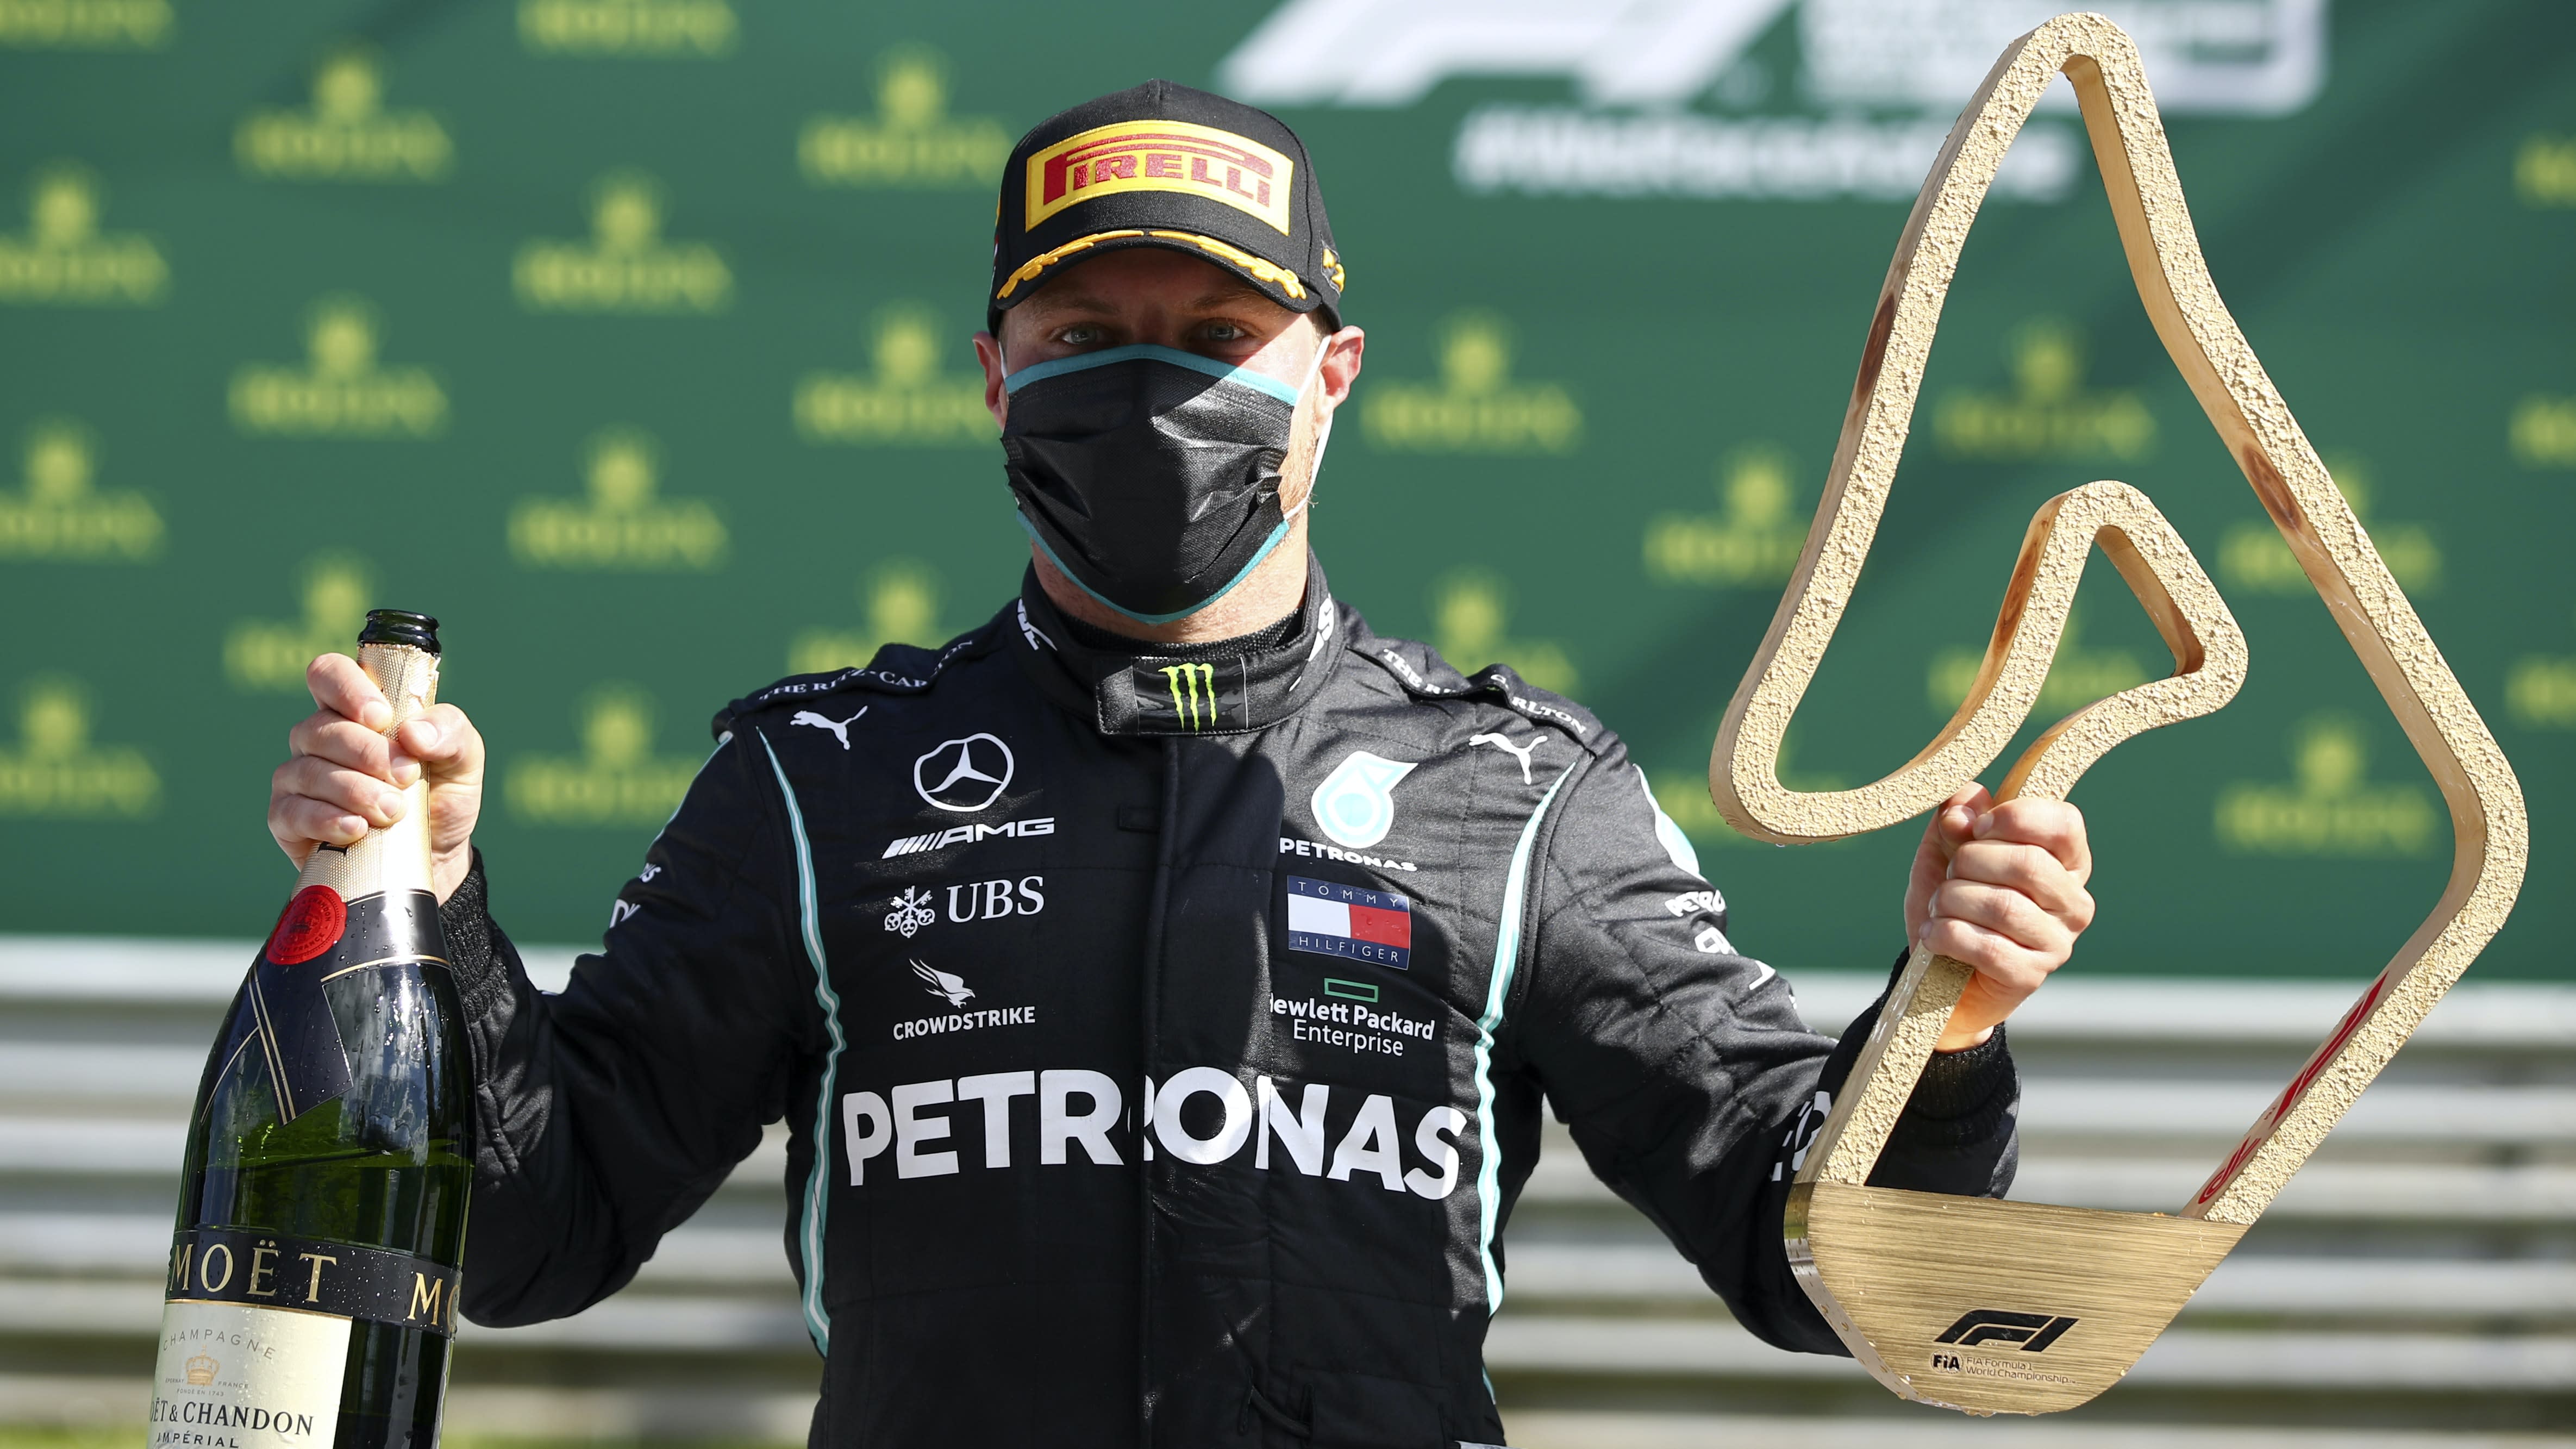 Valtteri Bottas clinches victory in 2020 Formula One season opener in